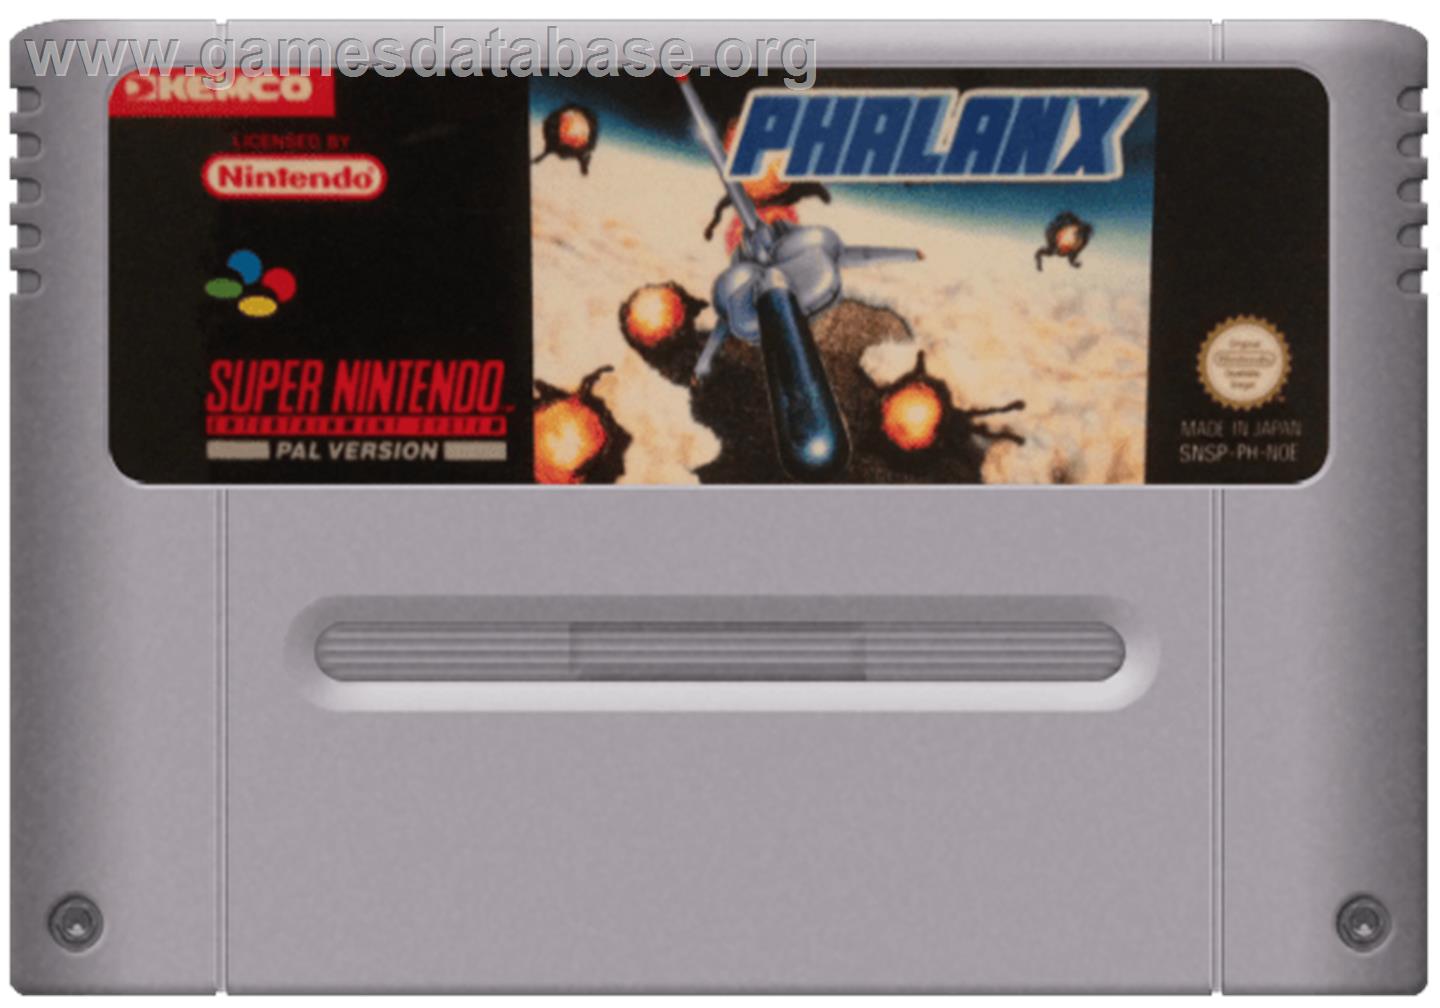 Phalanx - Nintendo SNES - Artwork - Cartridge